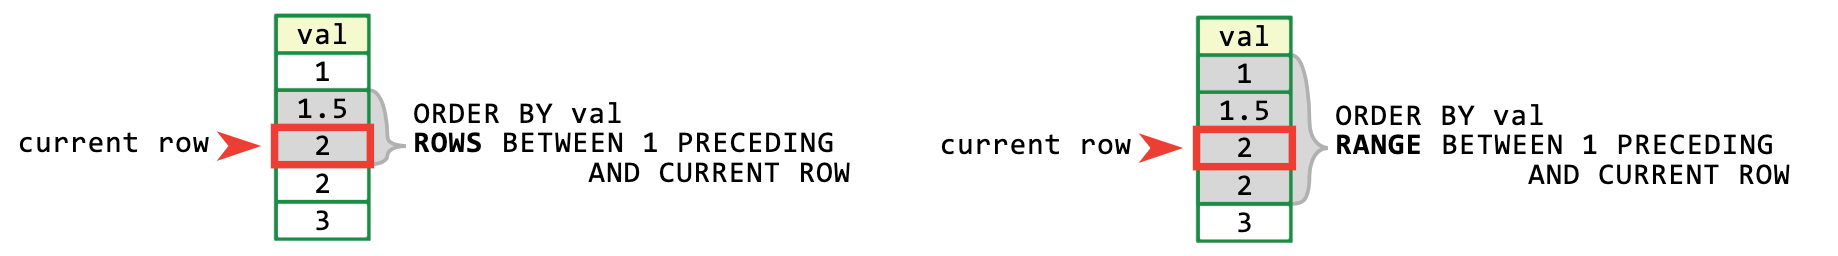 Figure 2. Rows window and Range window